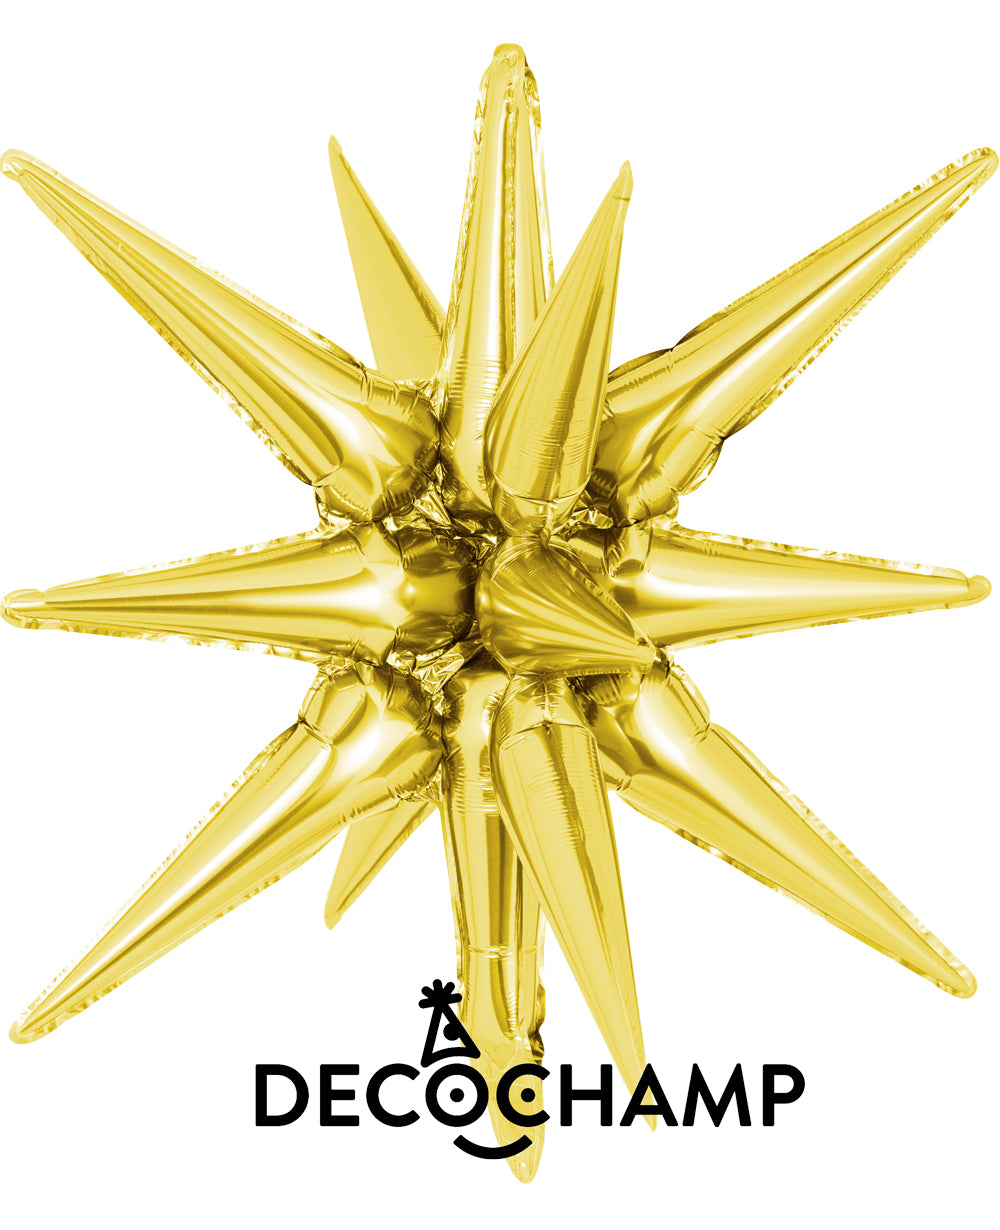 DecoChamp Starburst 3D Foil Balloon - 22 in. (Choose Color)